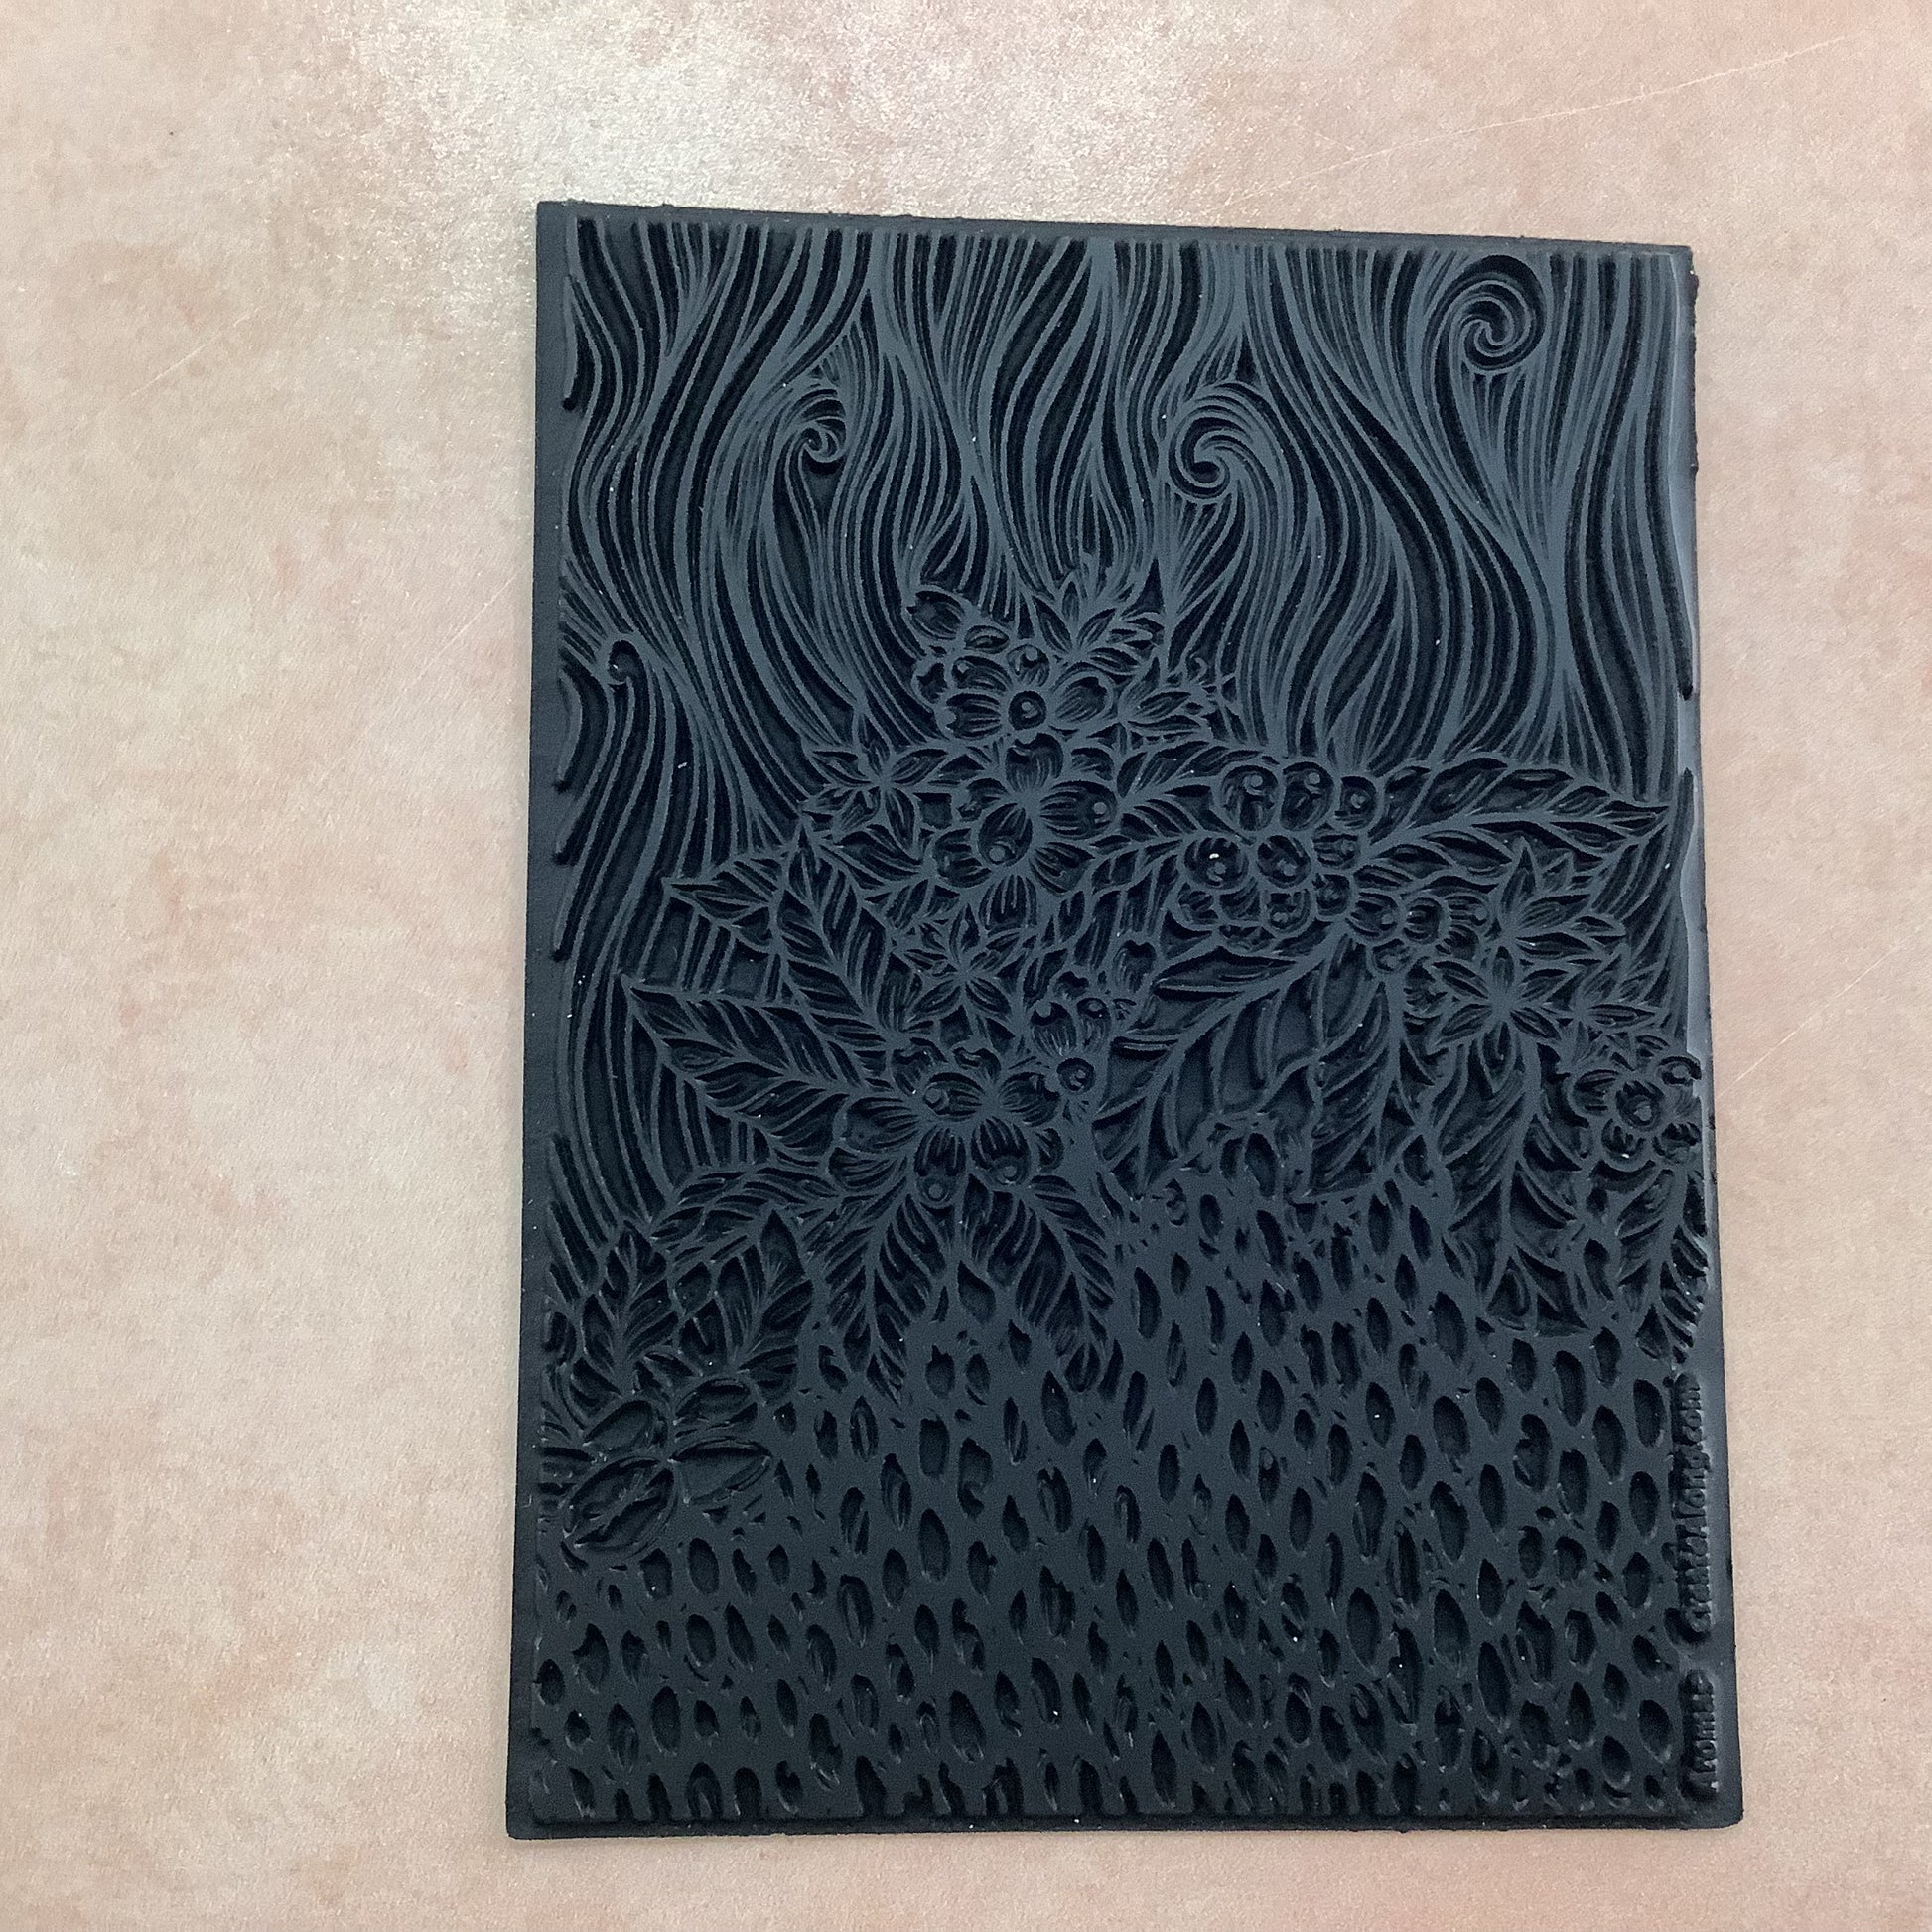 BABORUI 10Pcs Clay Texture Sheets for Polymer Clay, Reusable Clay